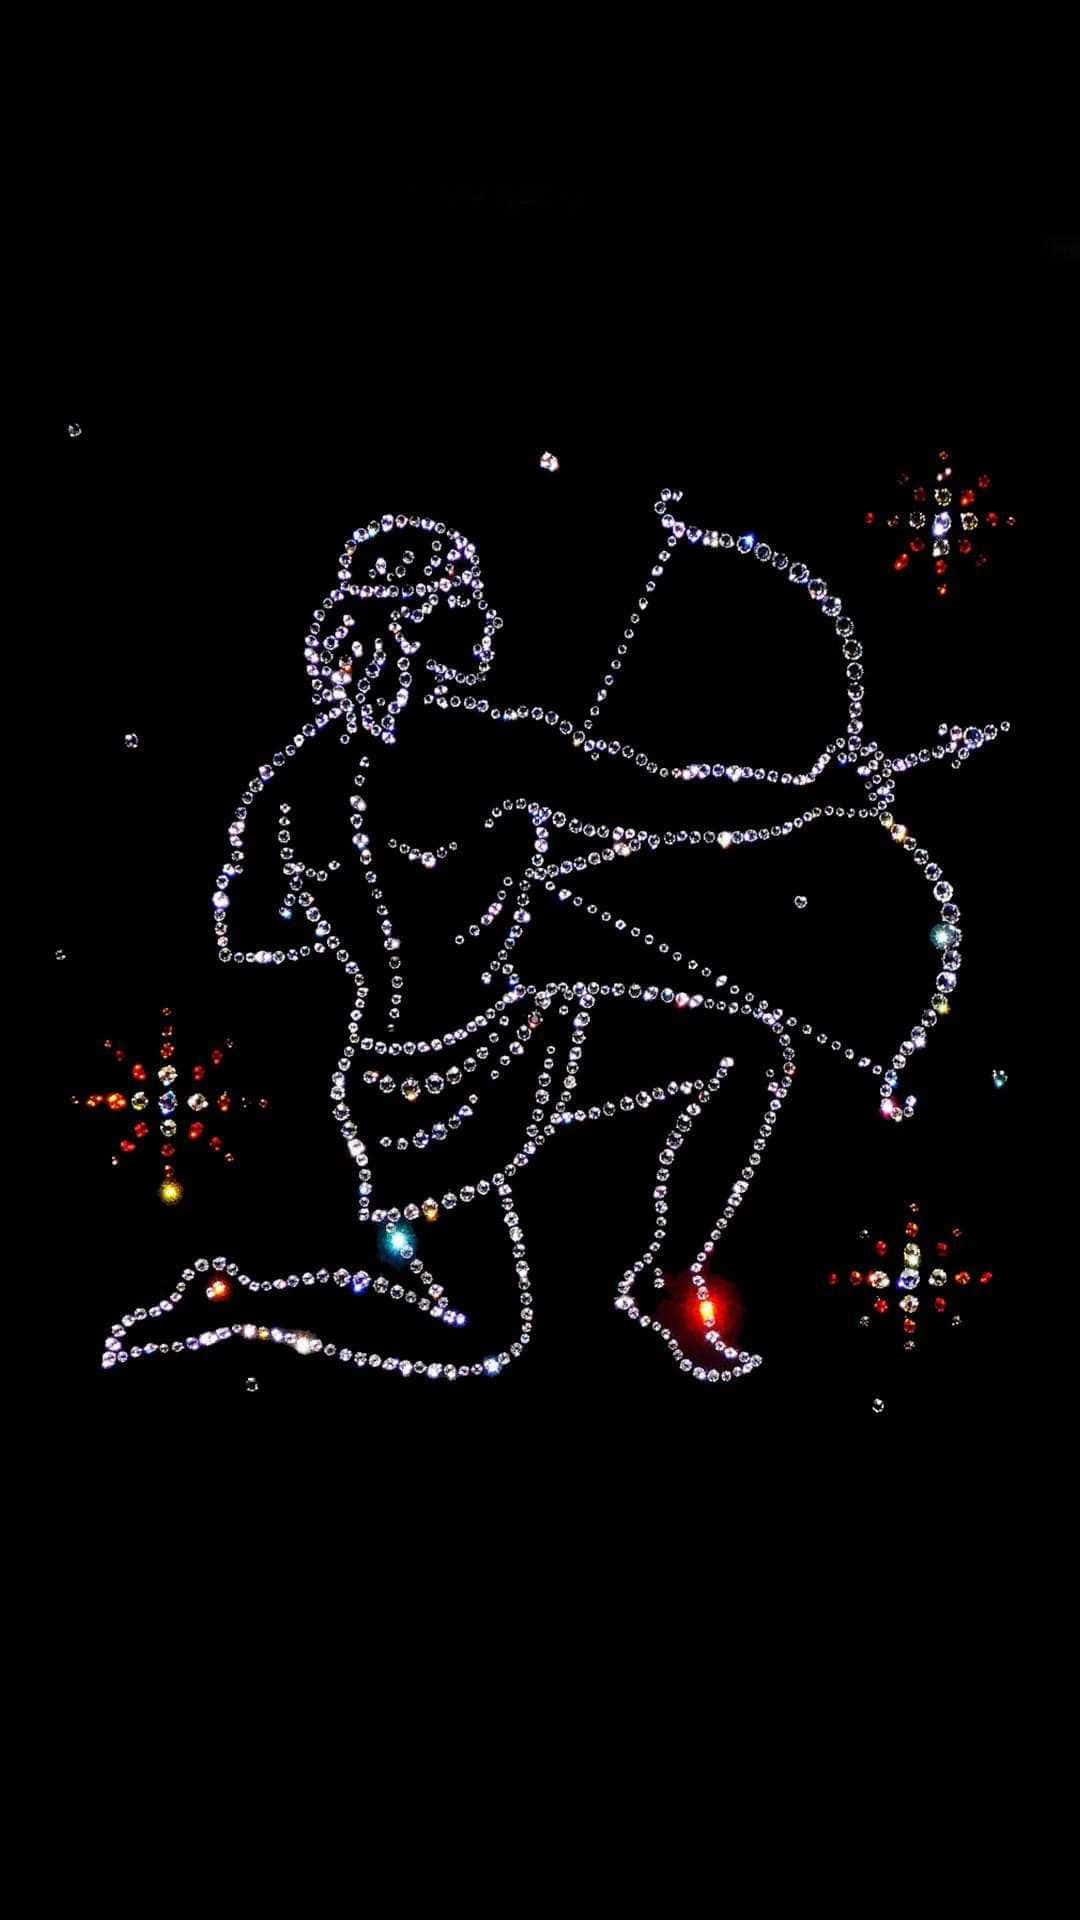 Galactic Sagittarius: An Astral Wonder